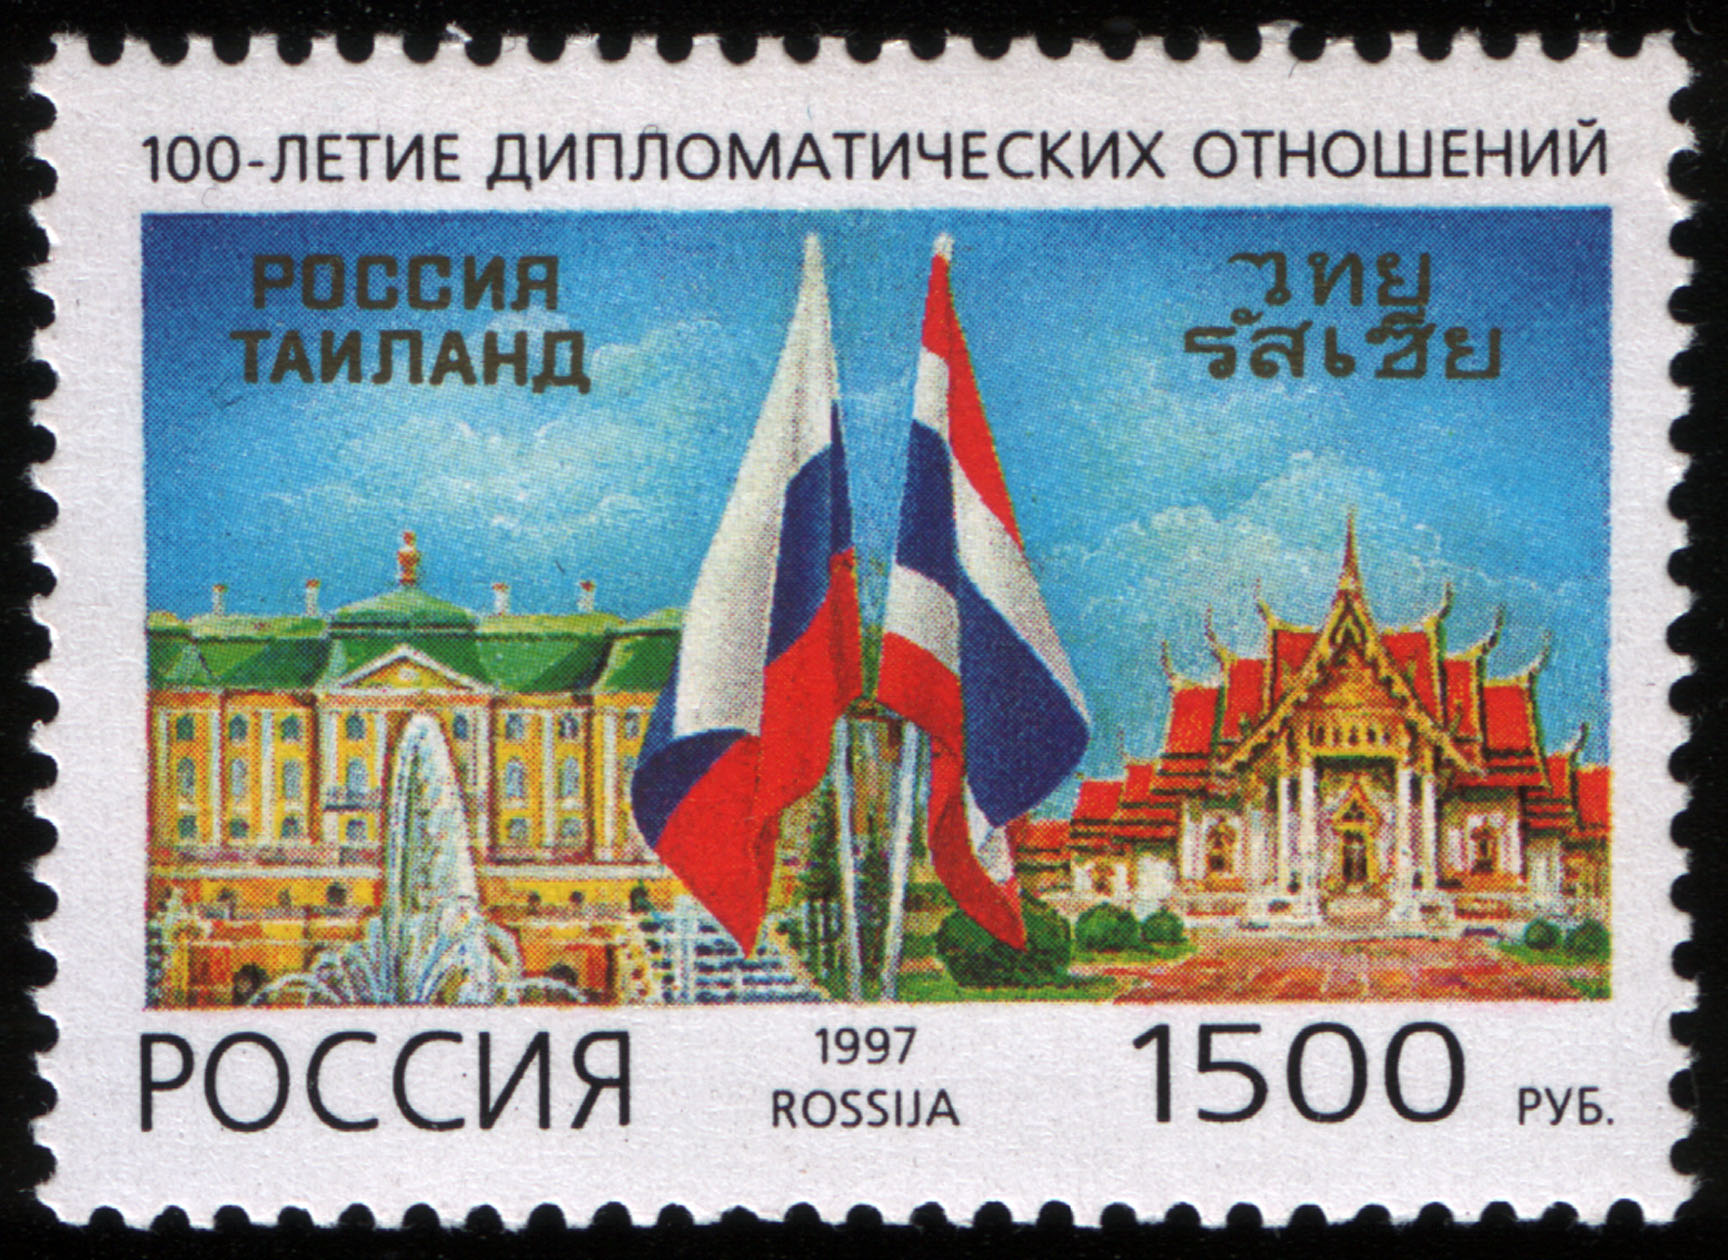 1500 г россия